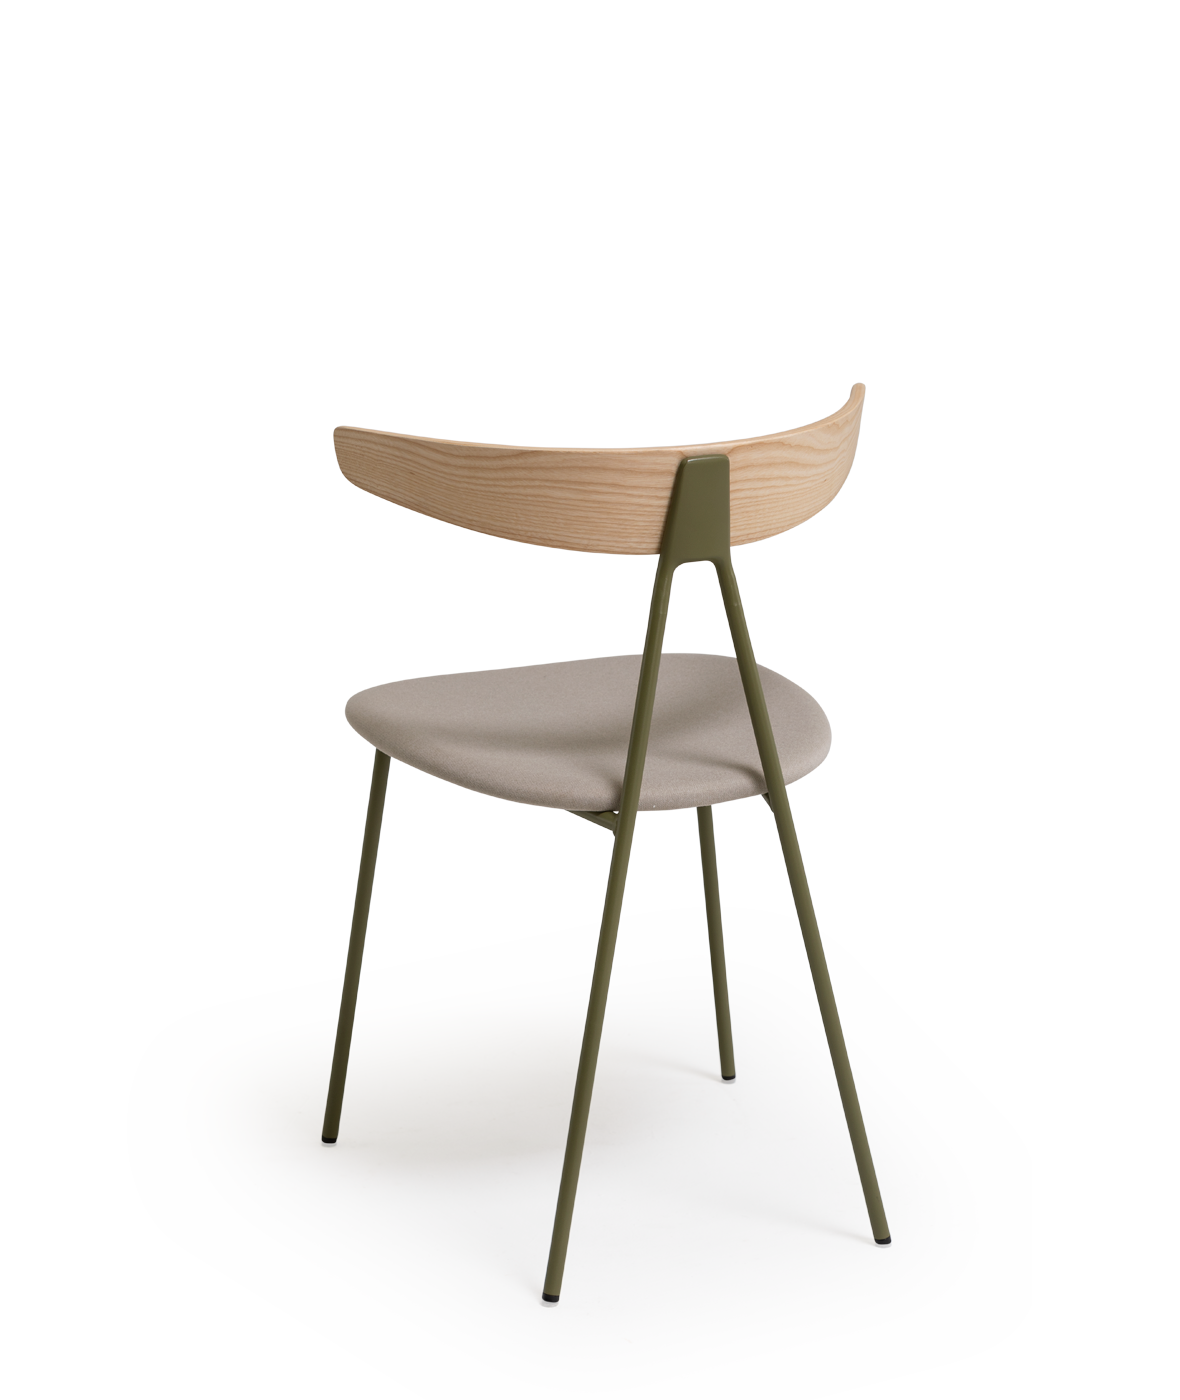 Vergés - Compass chair with metallic legs